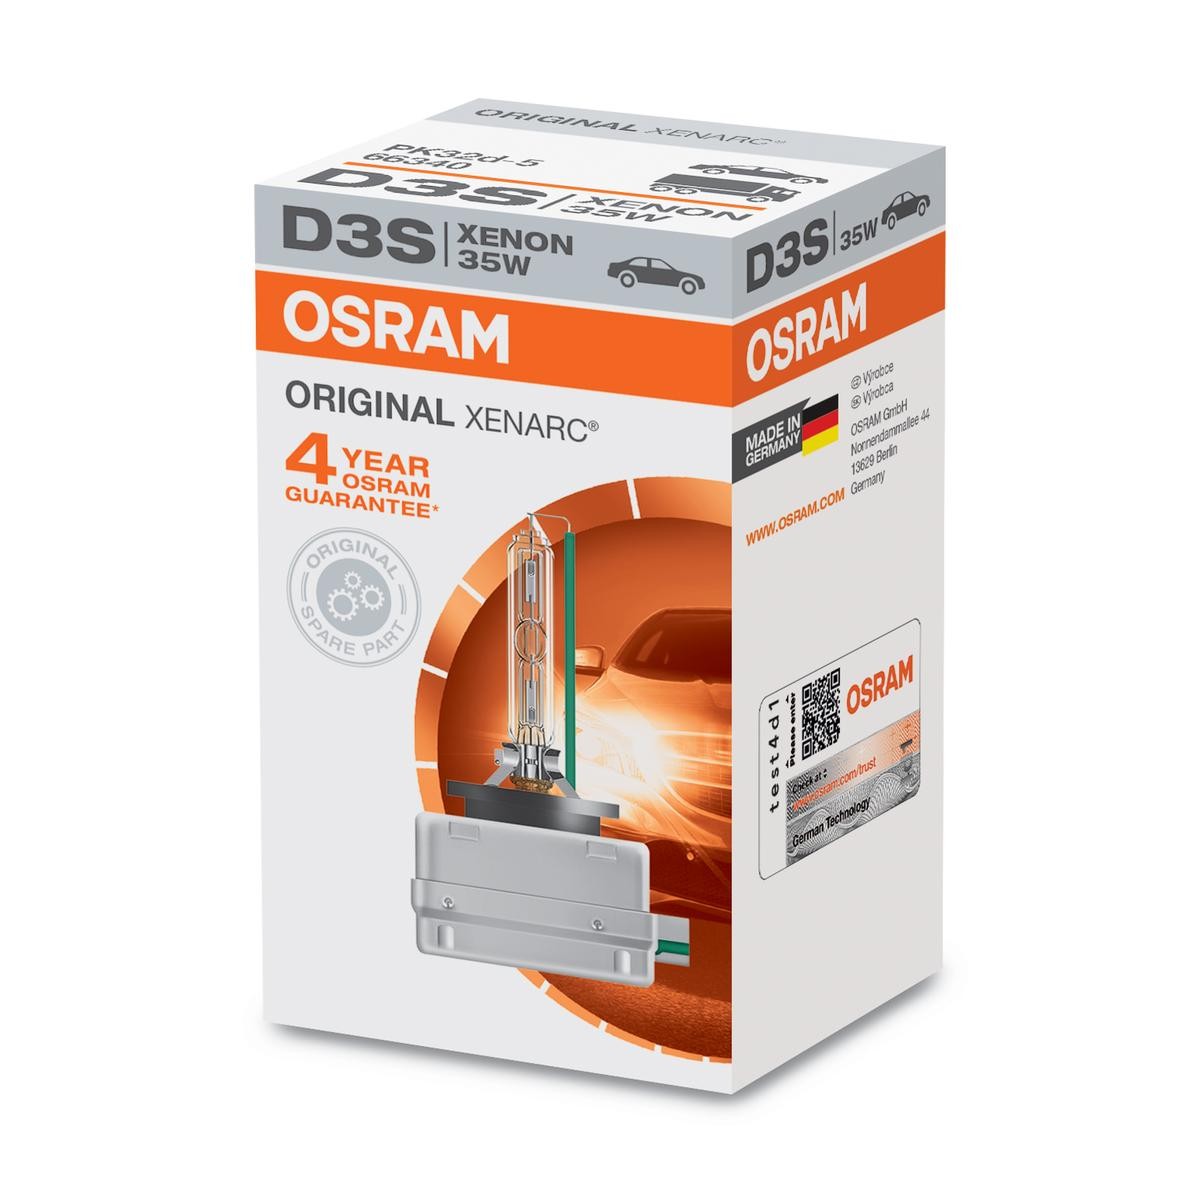 D3S OSRAM XENARC ORIGINAL D3S (Gas Discharge Lamp) 42V 35W PK32d-5 4500K Xenon Bulb, spotlight 66340 cheap